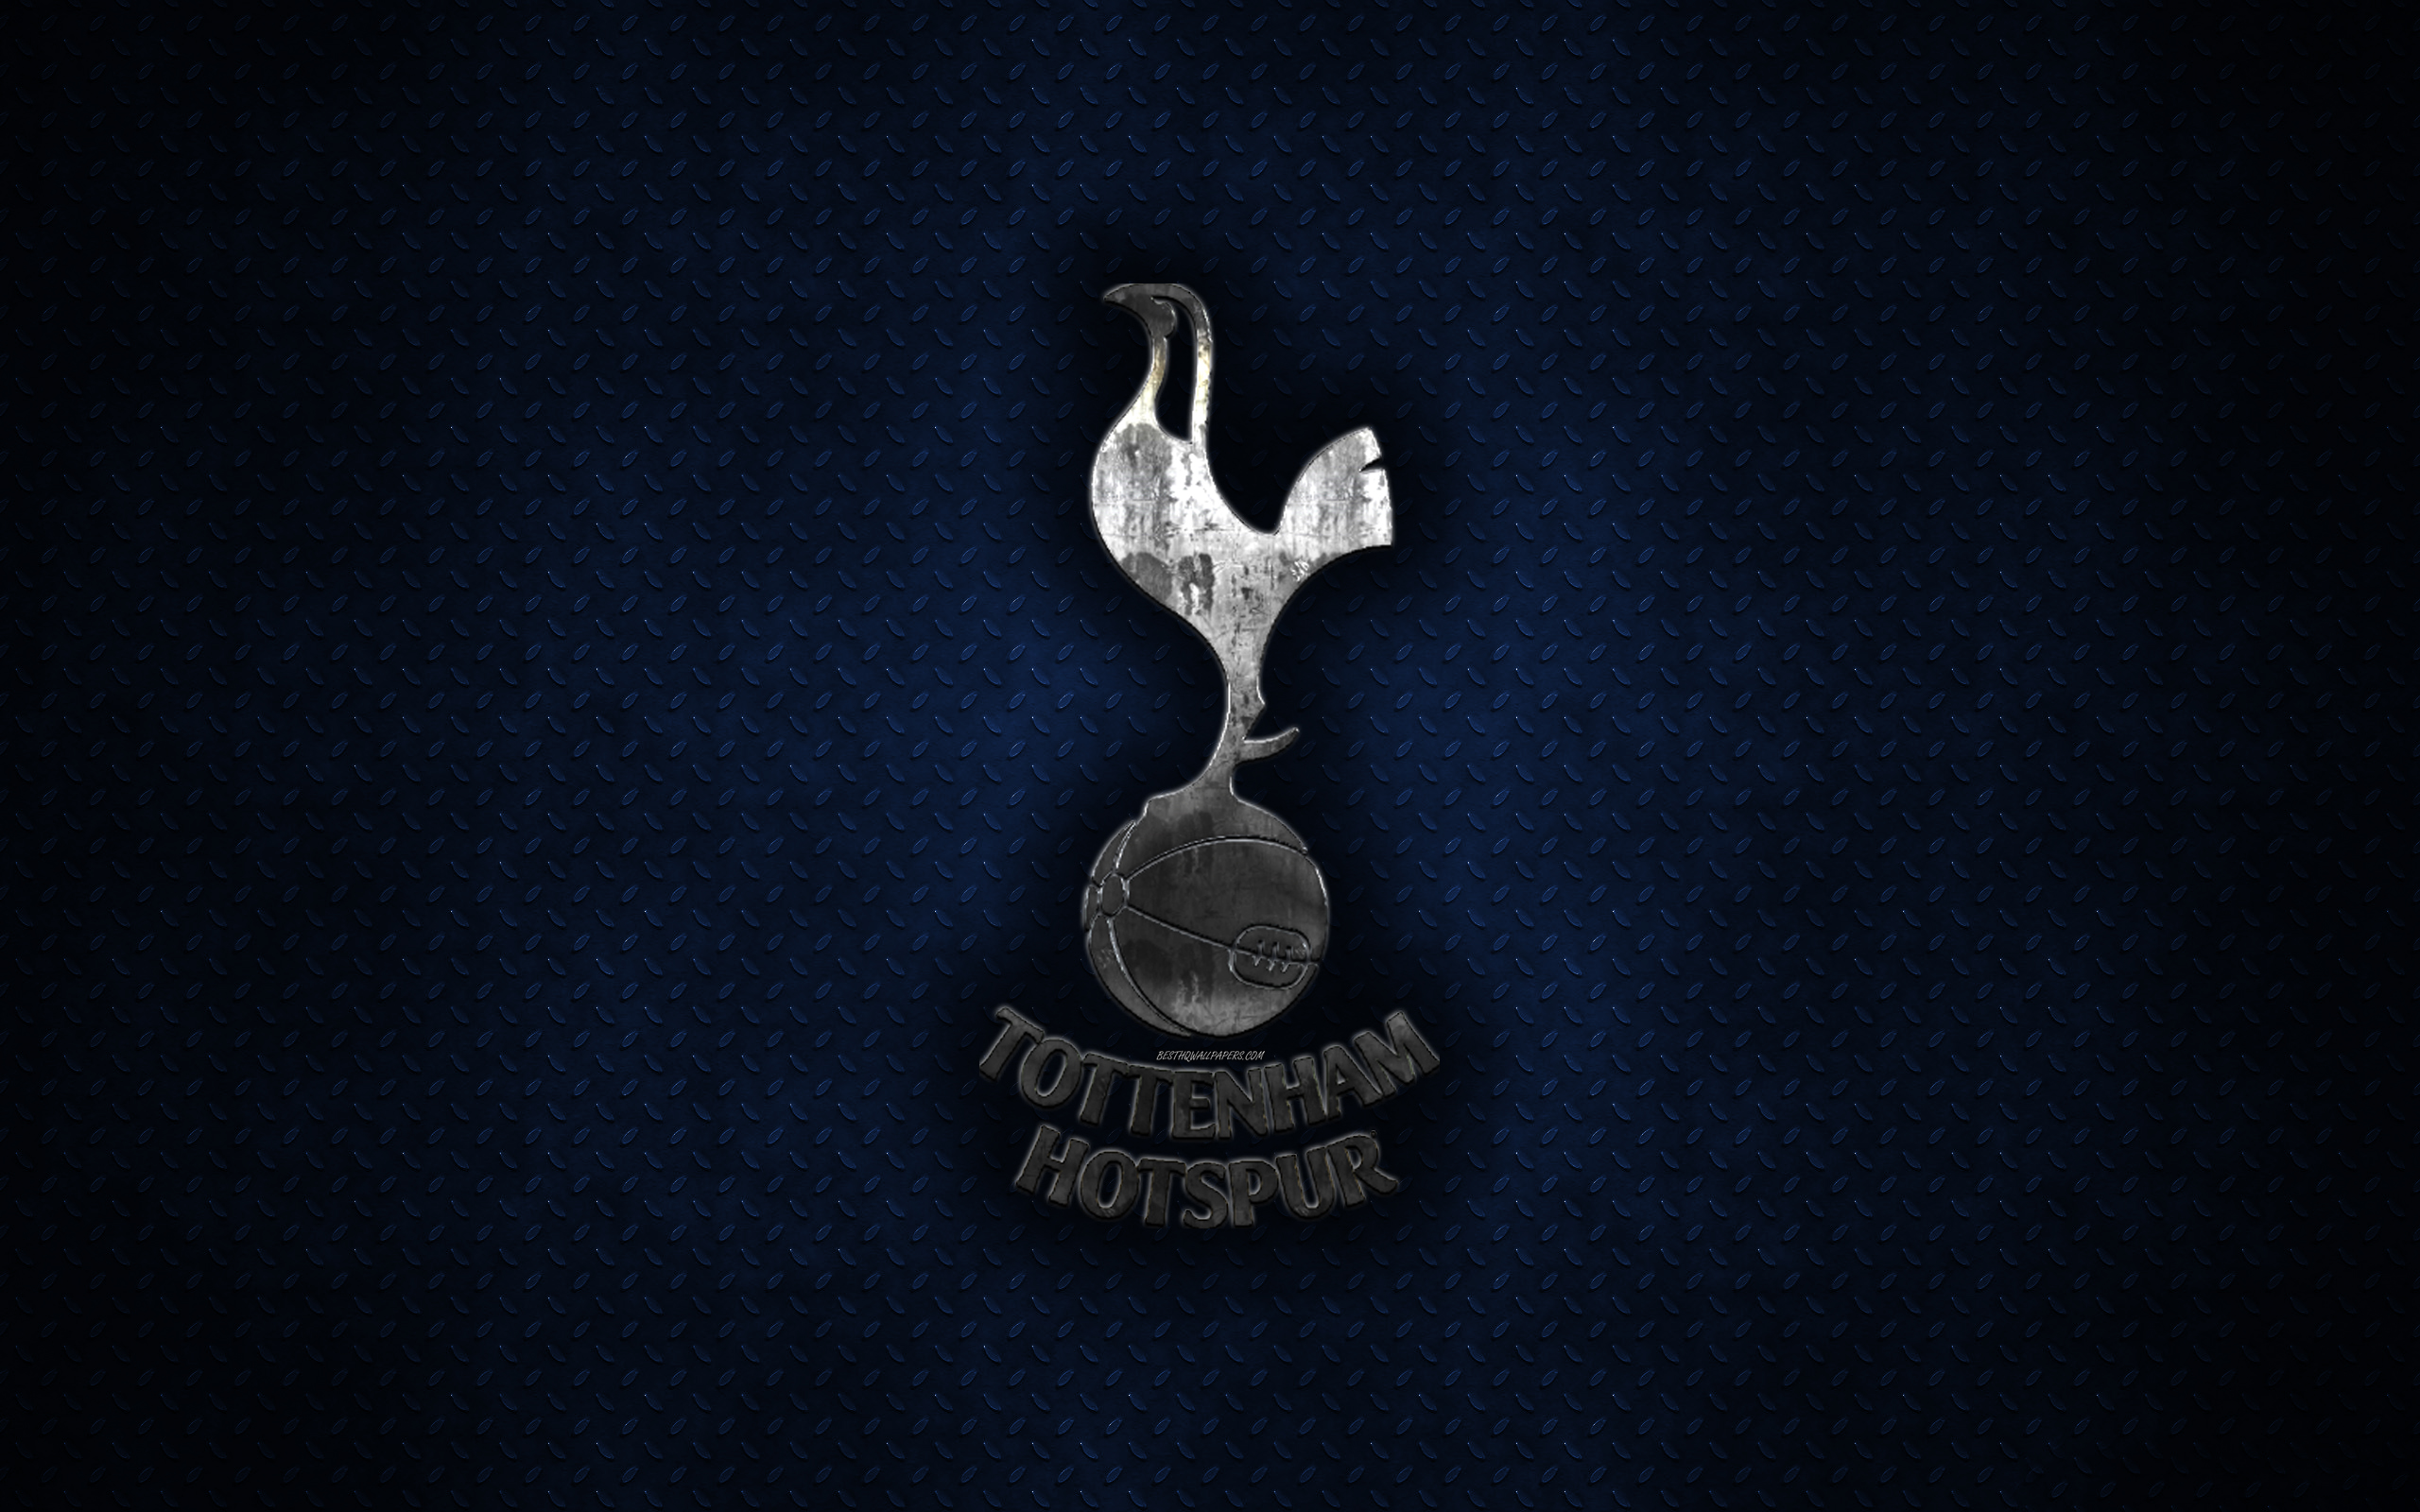 Logo Soccer Tottenham Hotspur F C 2560x1600